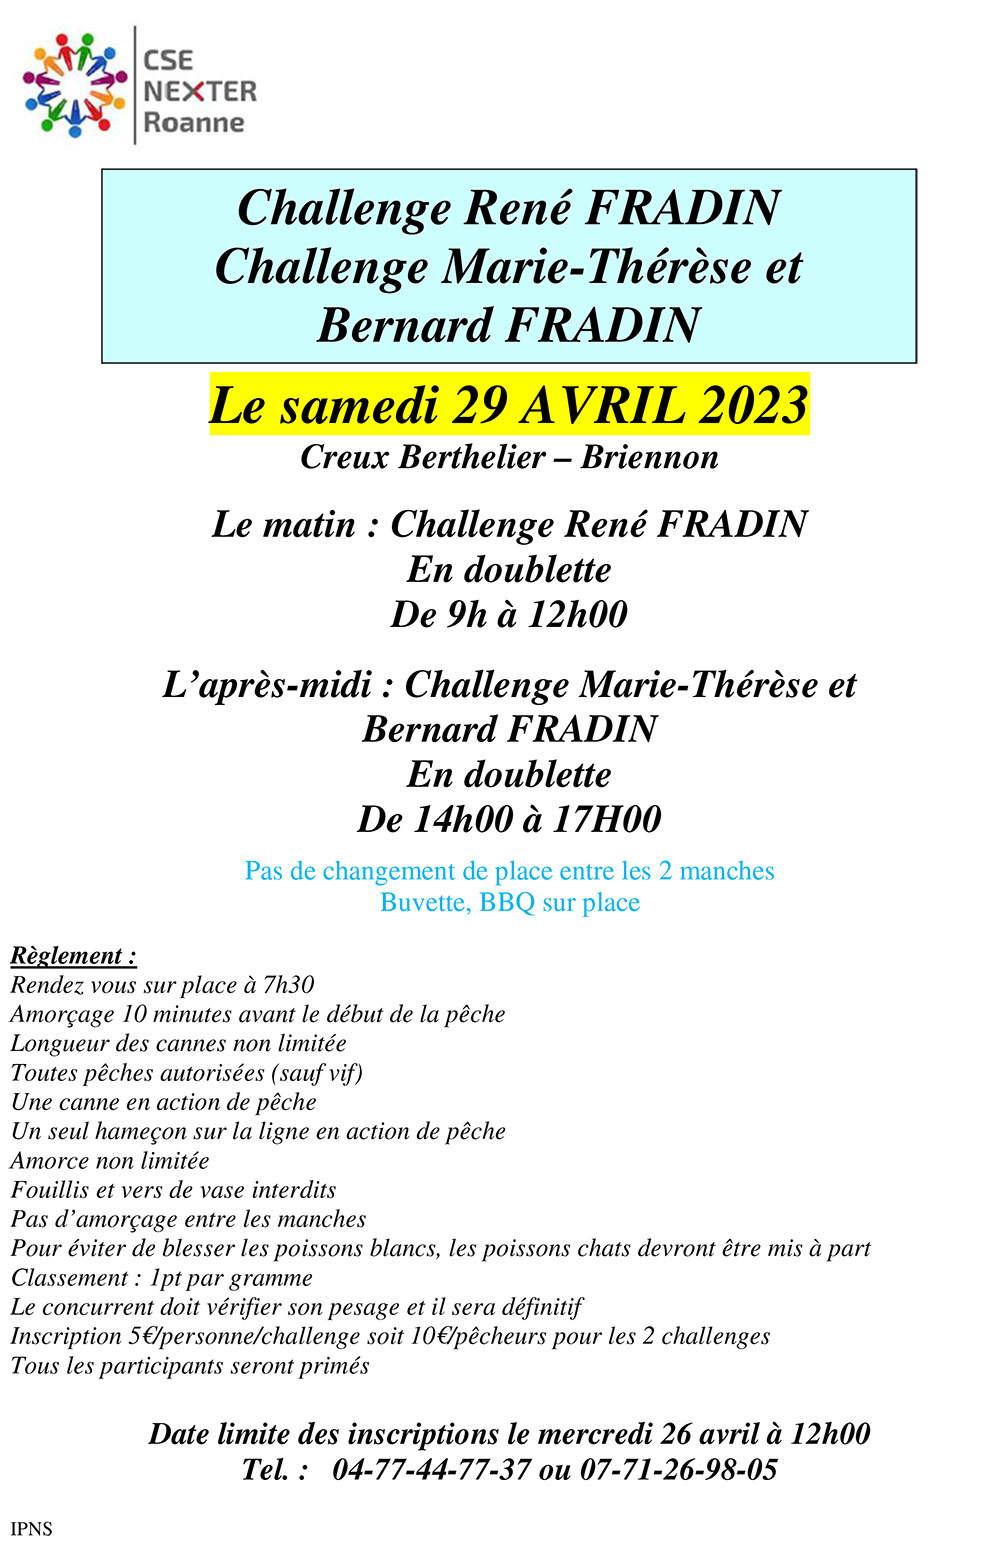 Challenges René et Bernard FRADIN 2023